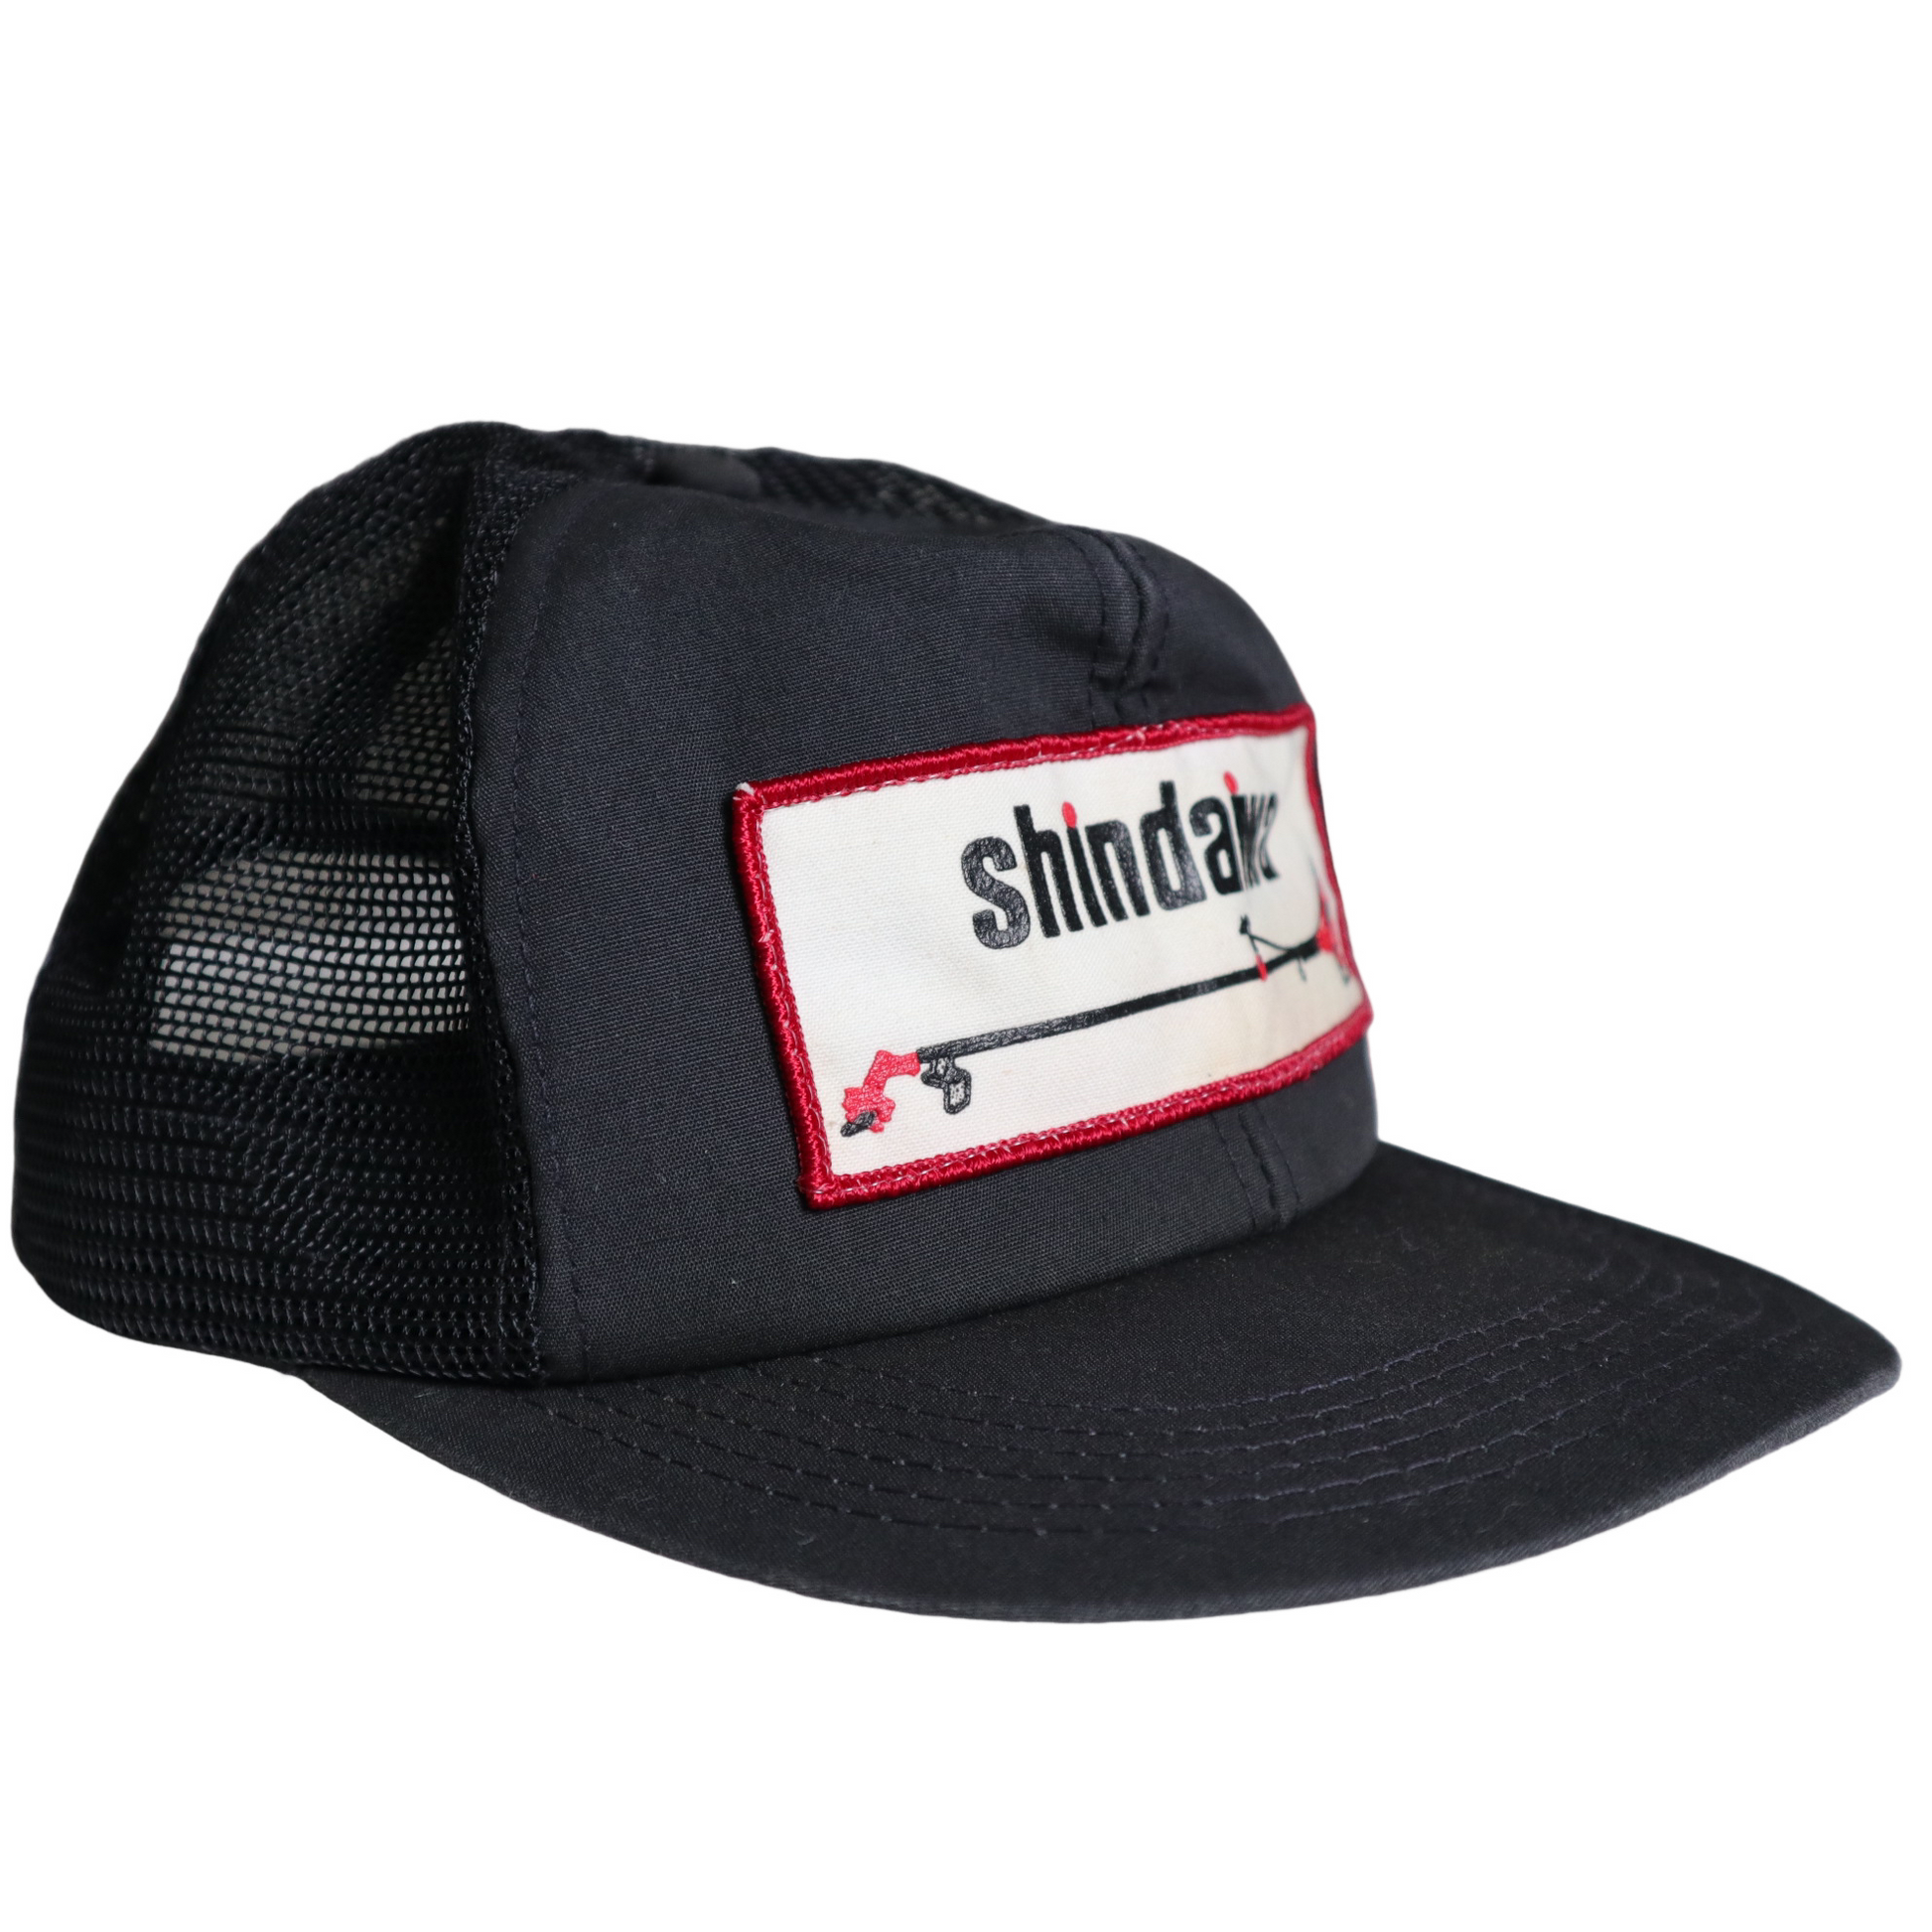 80-90s American hat – black trucker 富士鳥古著 made Shindaiwa